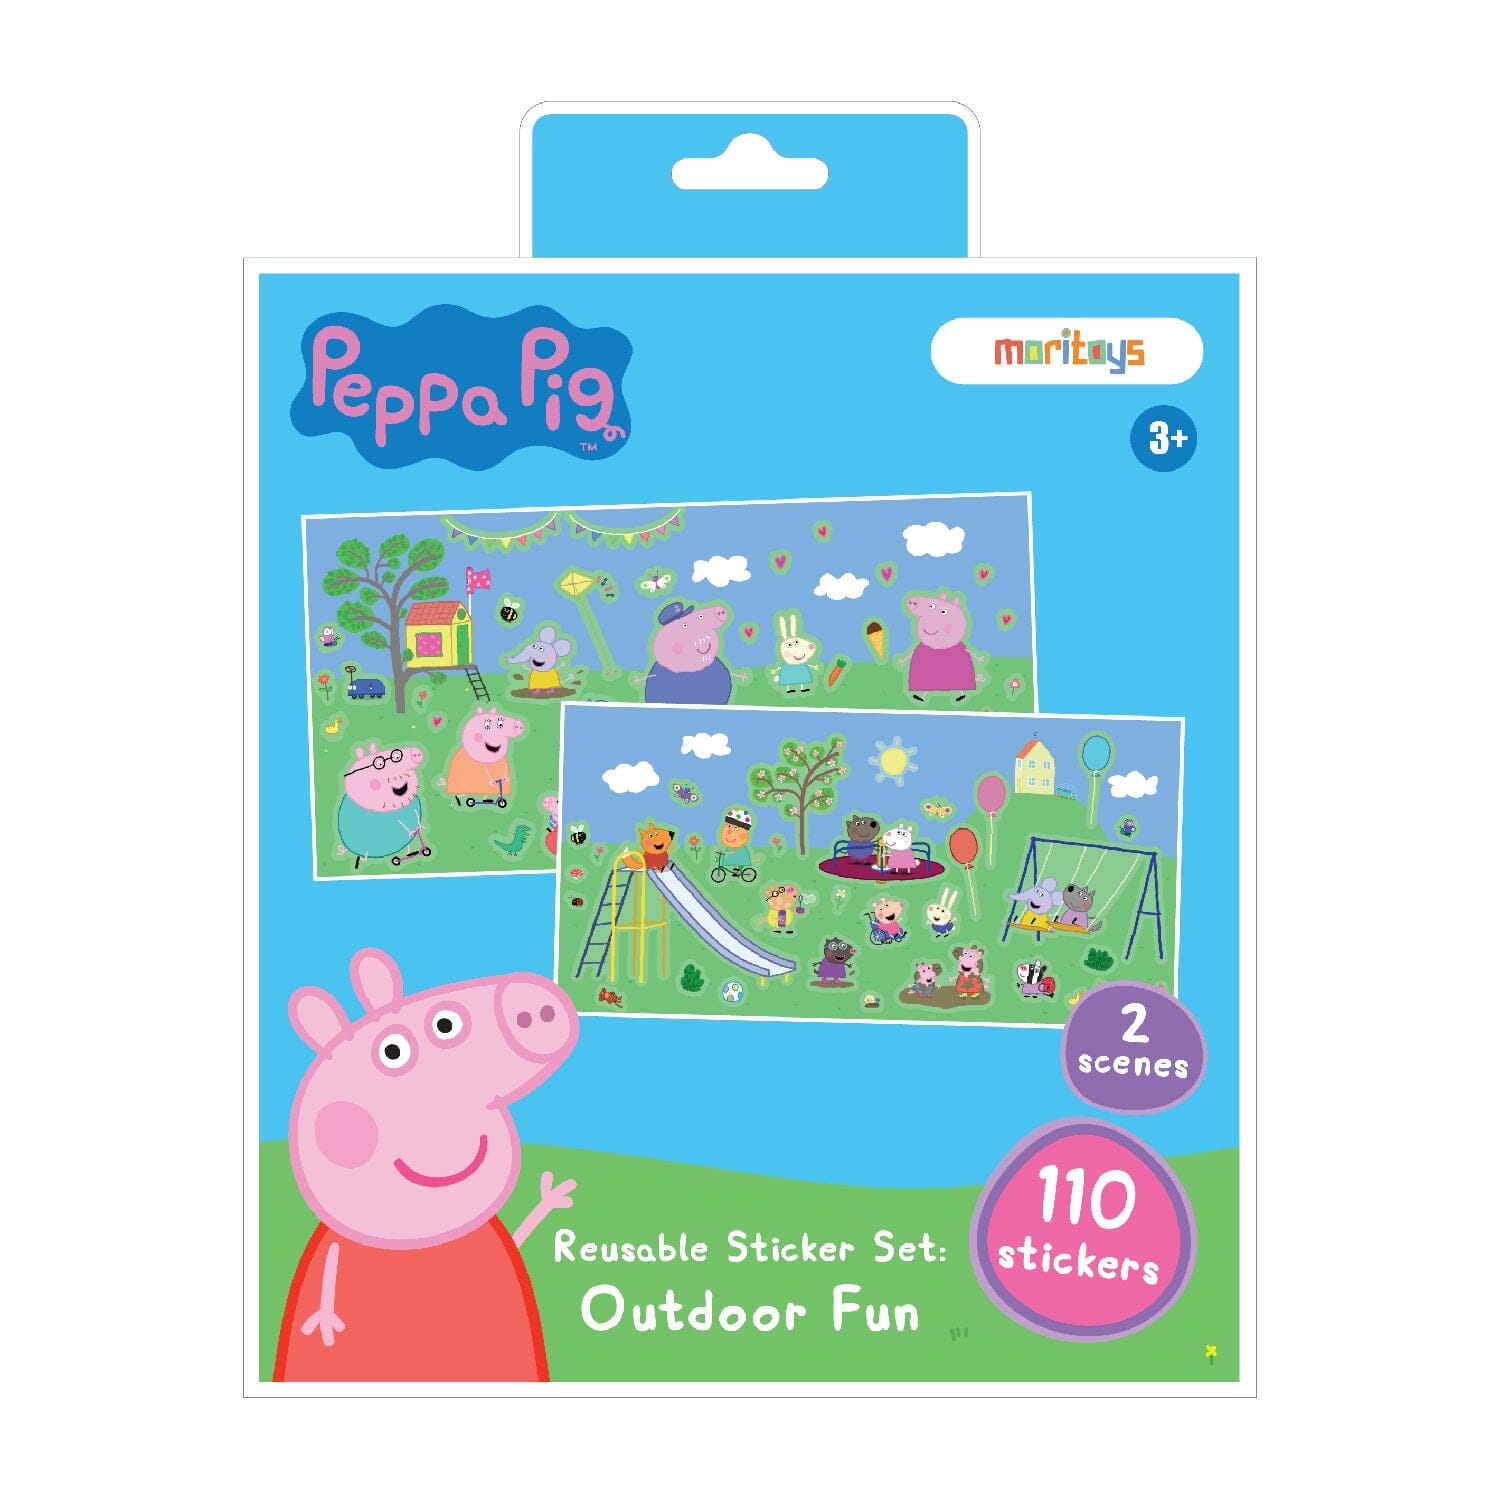 Outdoor Fun Reusable Sticker Set: Peppa Pig ile sınırsız sahne yarat - 110 çıkartma 2 sahne moritoys 